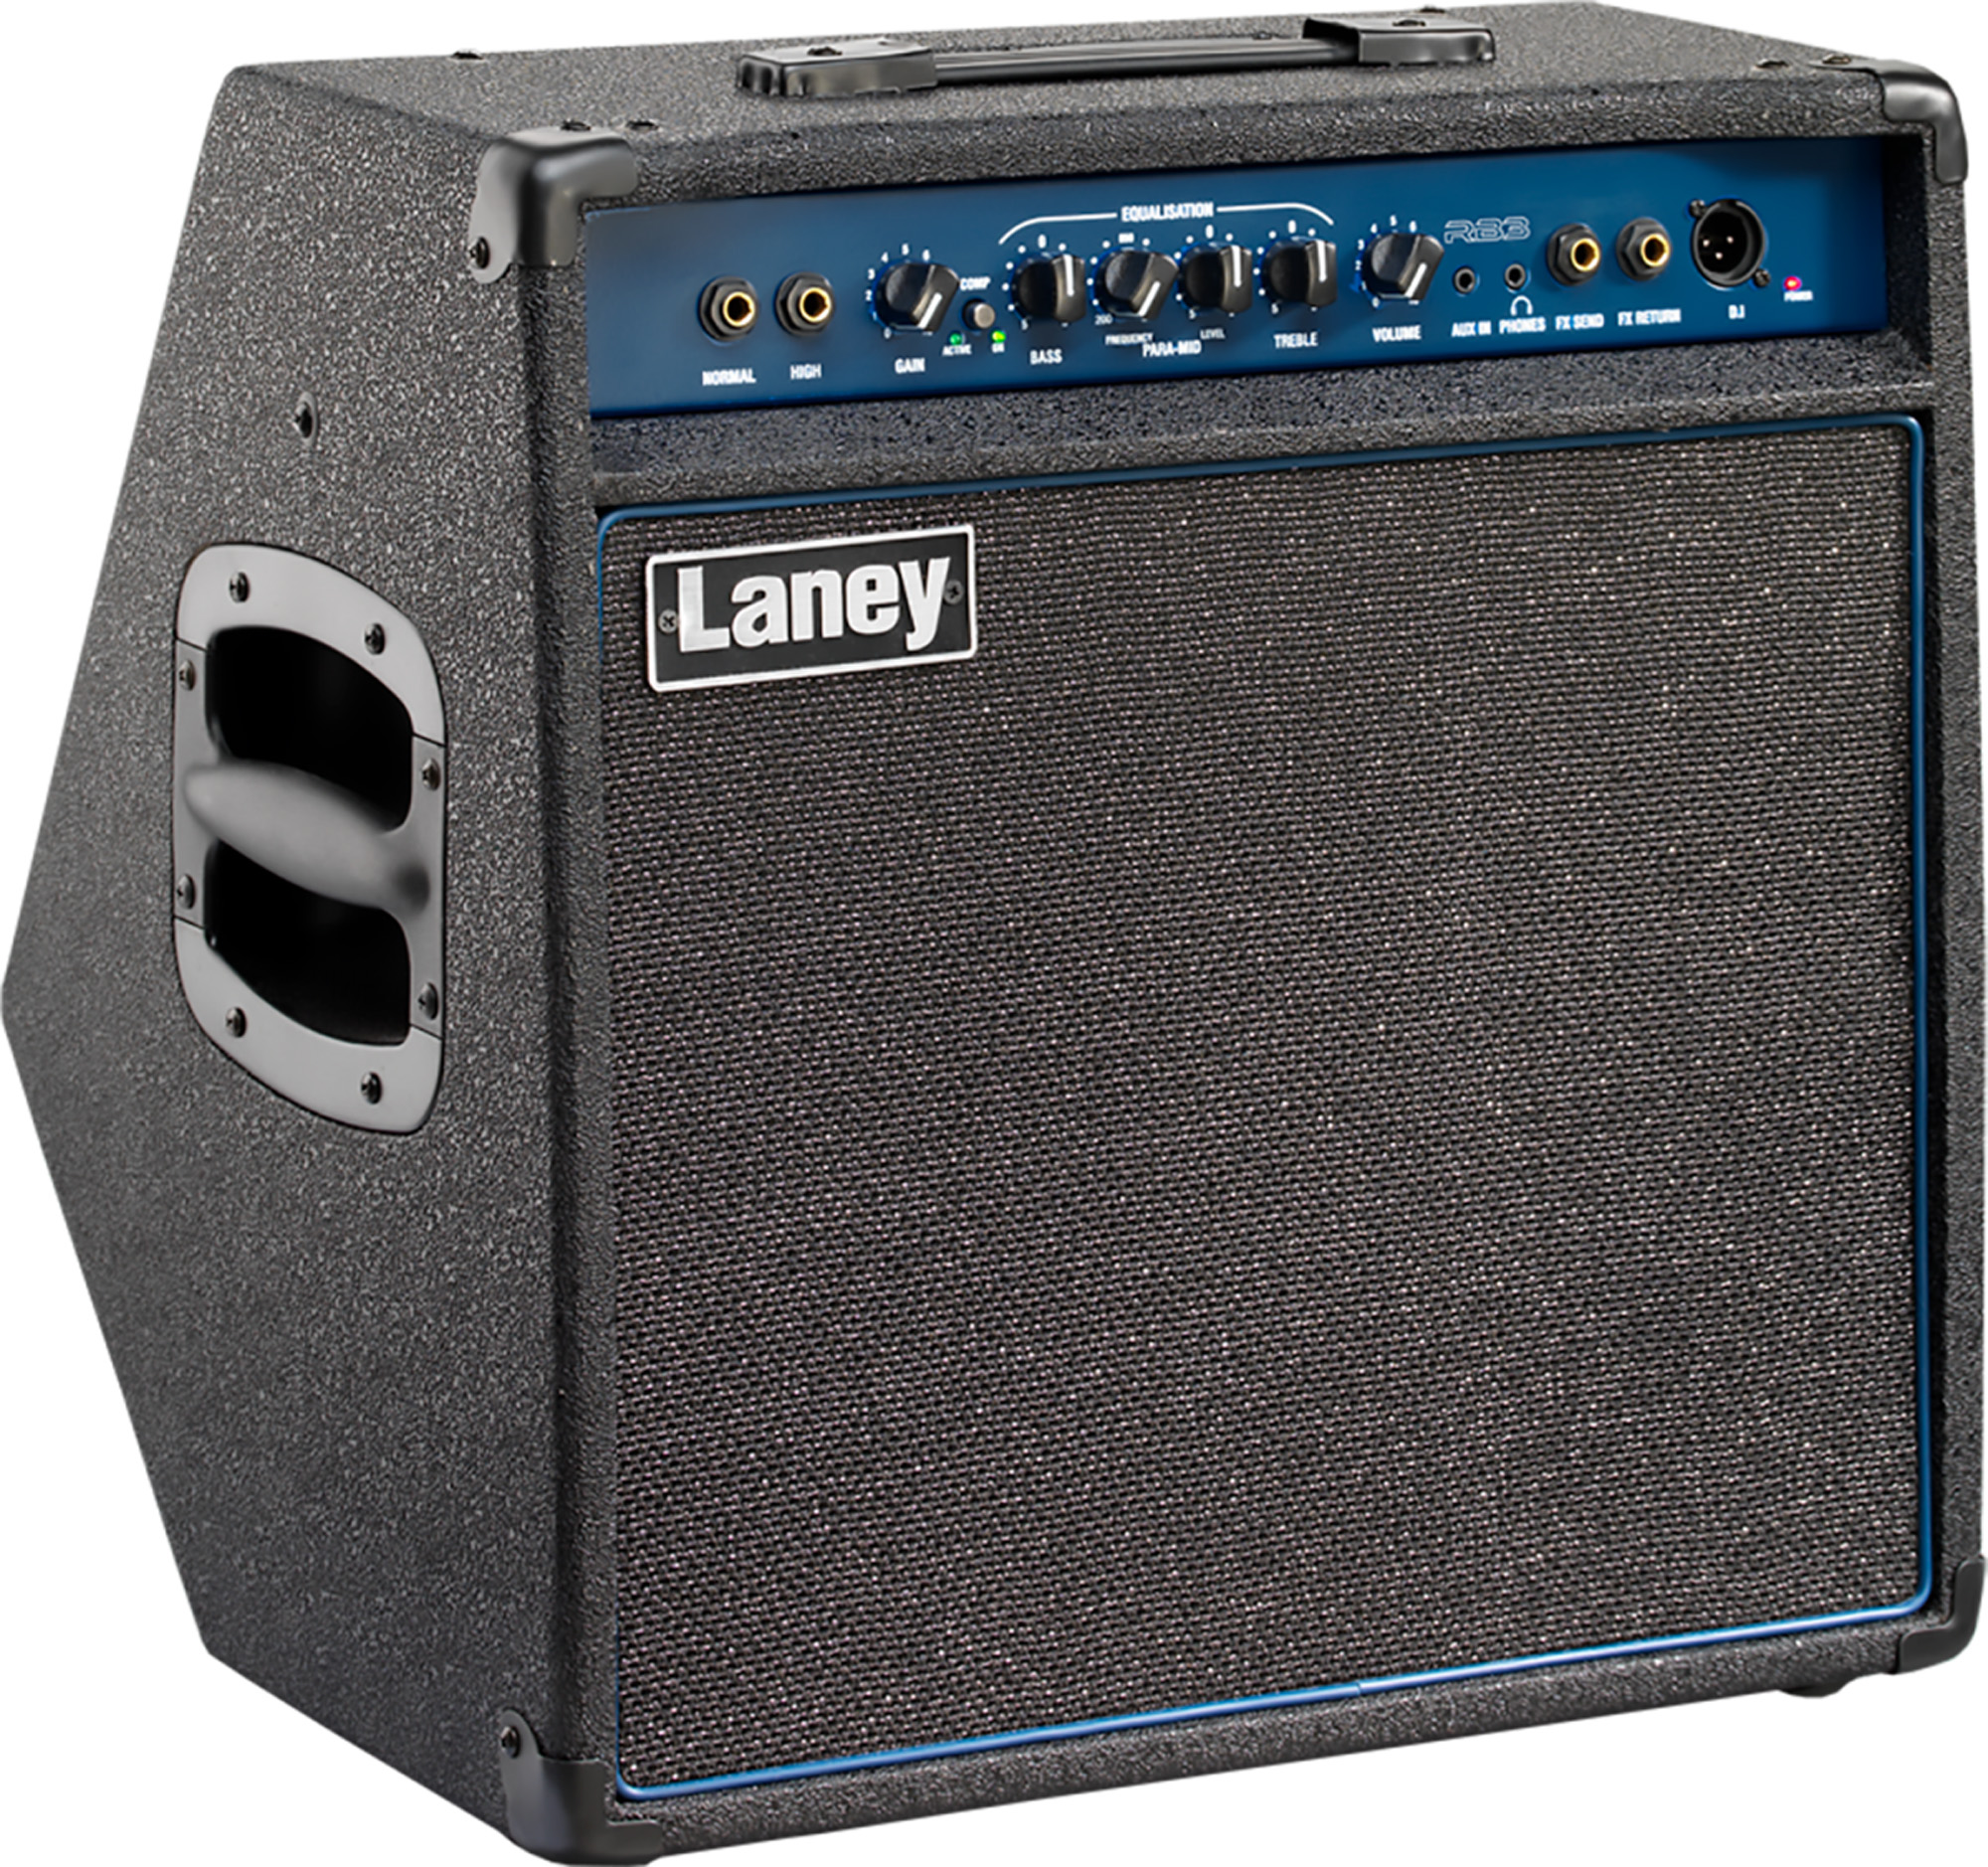 Laney Rb3 - Bass combo amp - Variation 2